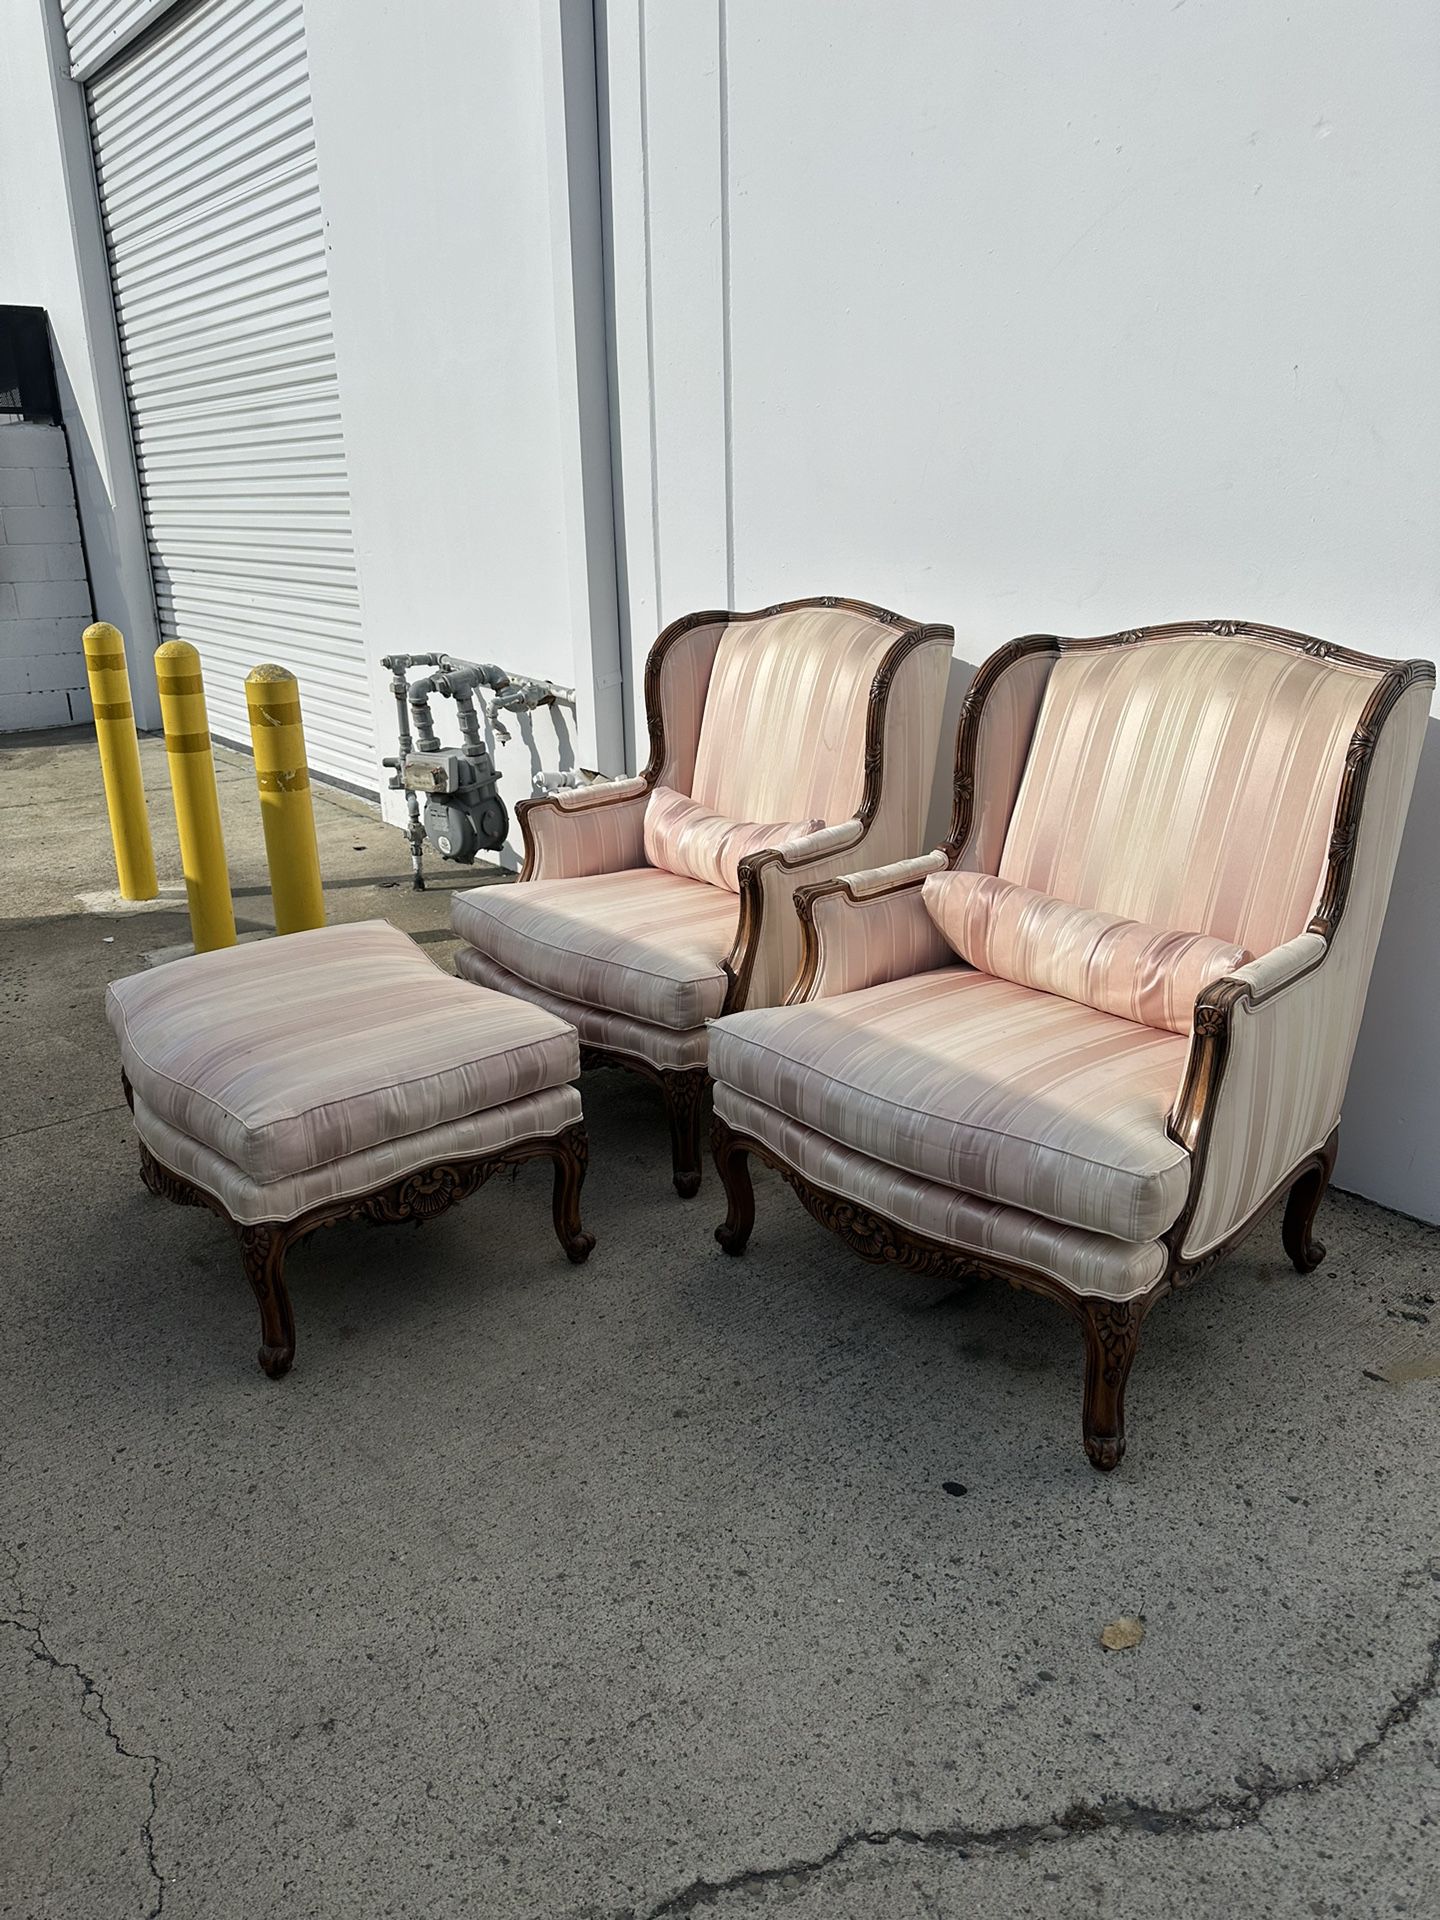 3pcs Set. Vintage Chairs And Ottoman $200